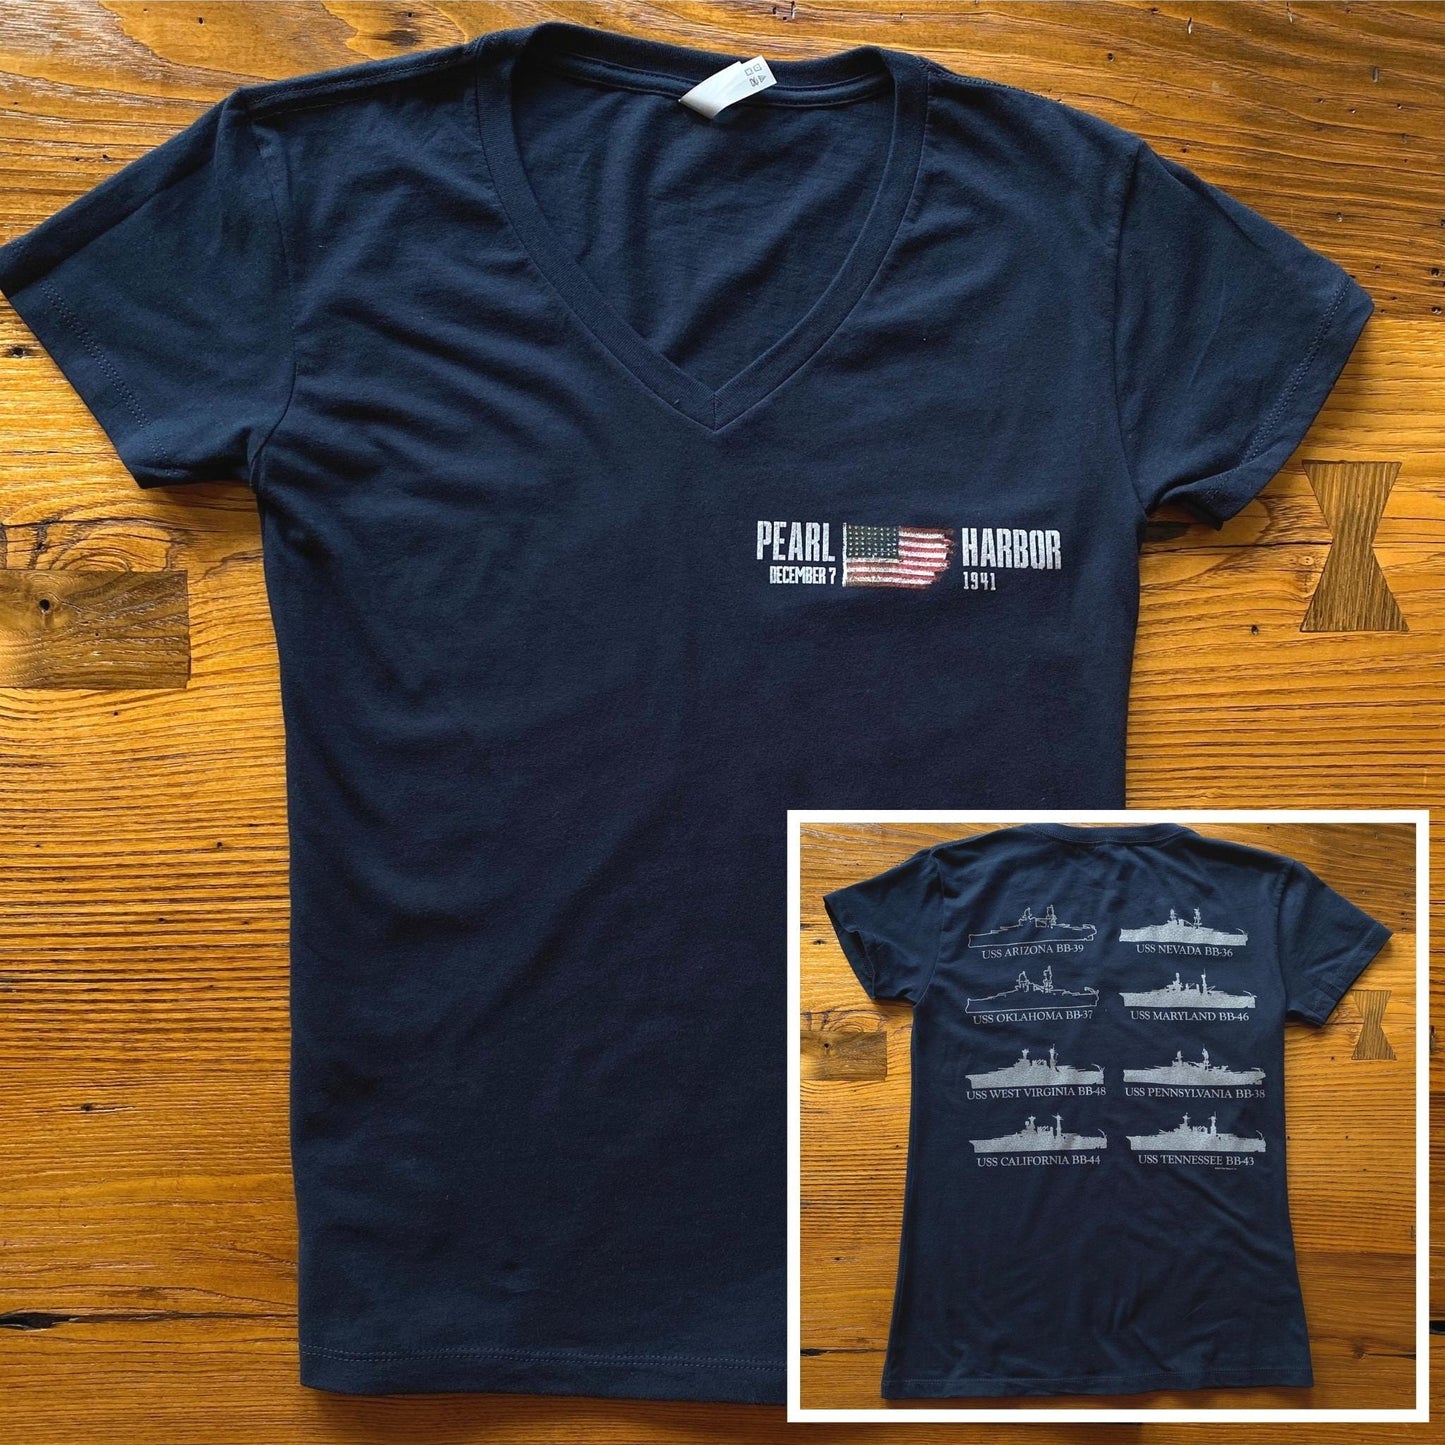 Pearl Harbor “Battleship Row” Women's v-neck shirt from the History List Store